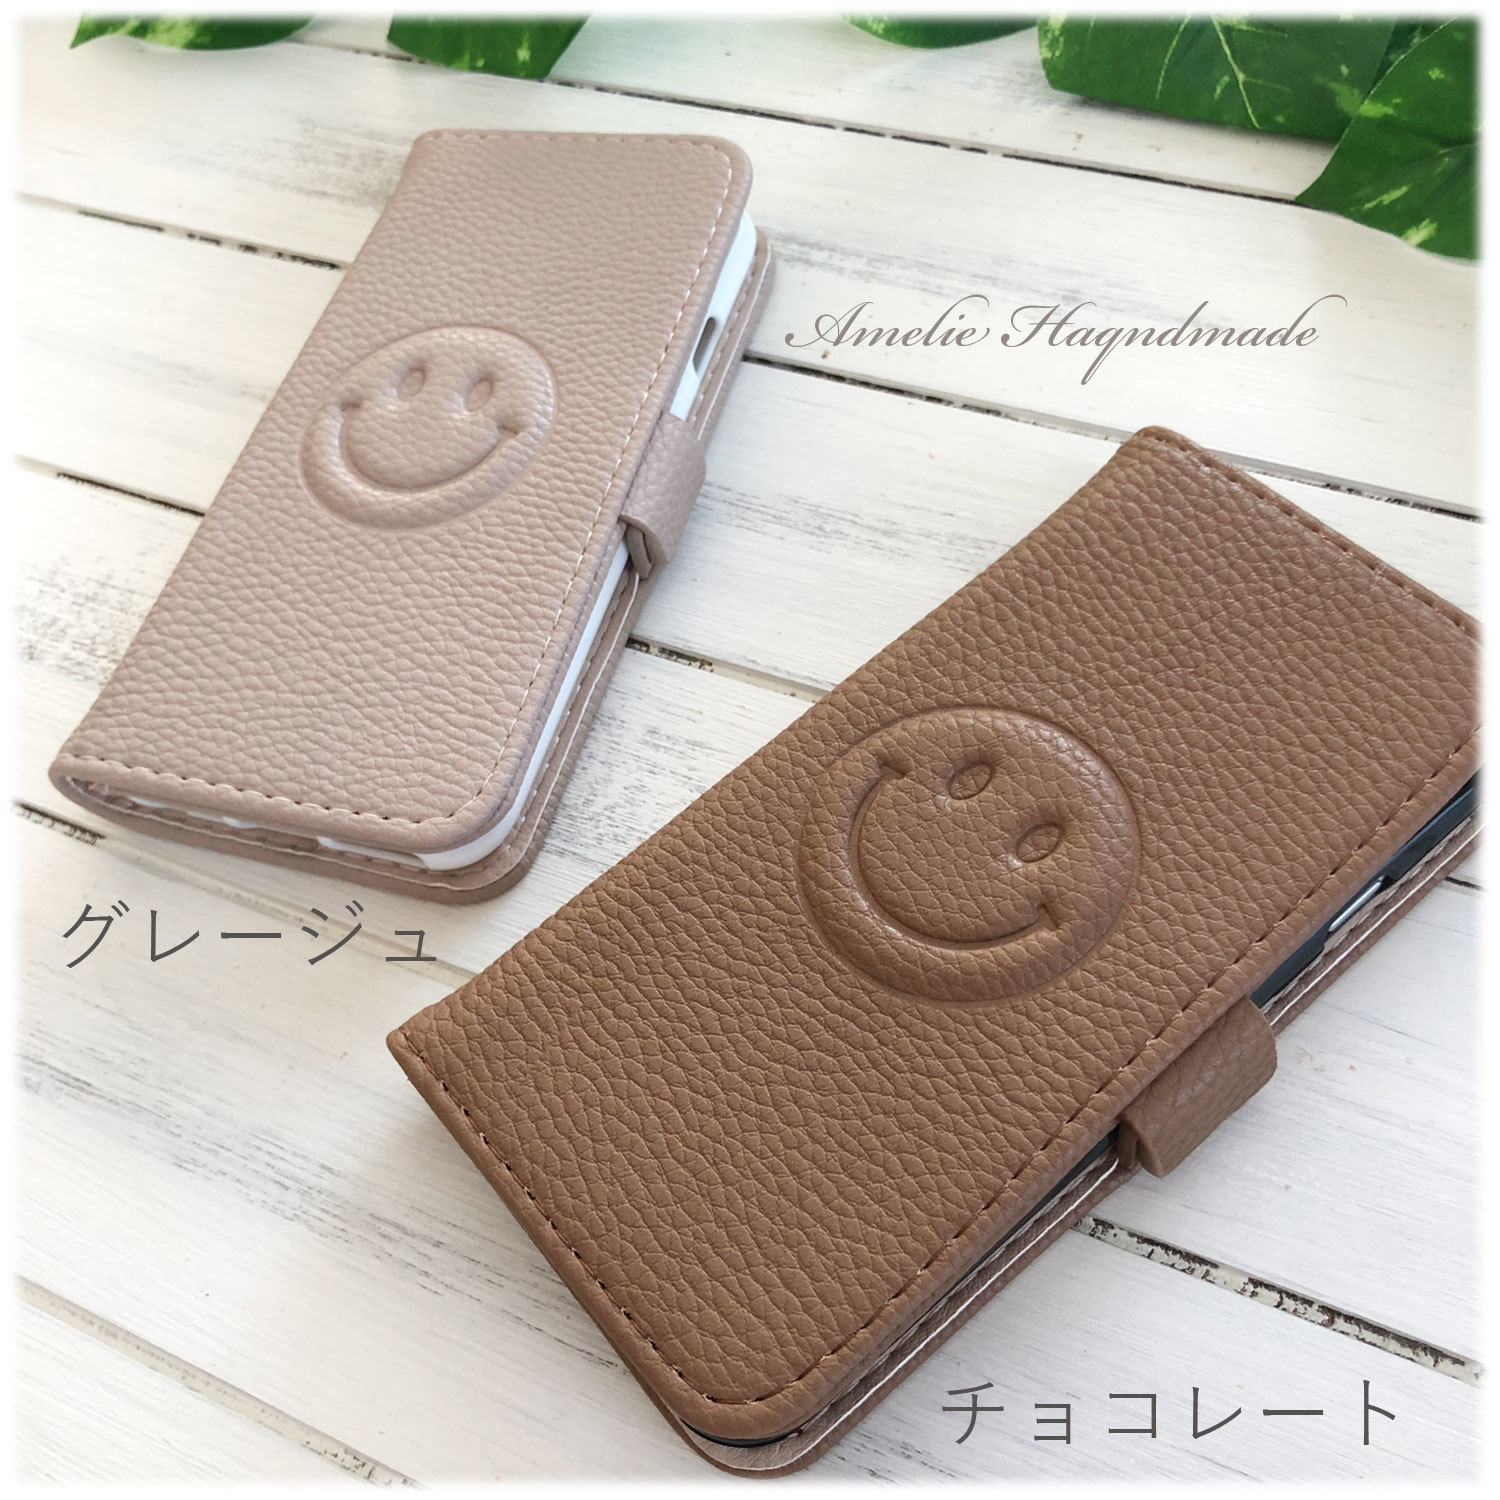 Sale スマイルbigエンボス ニコちゃん型押し 手帳型スマホケース Iphoneケースold Amelie Handmade